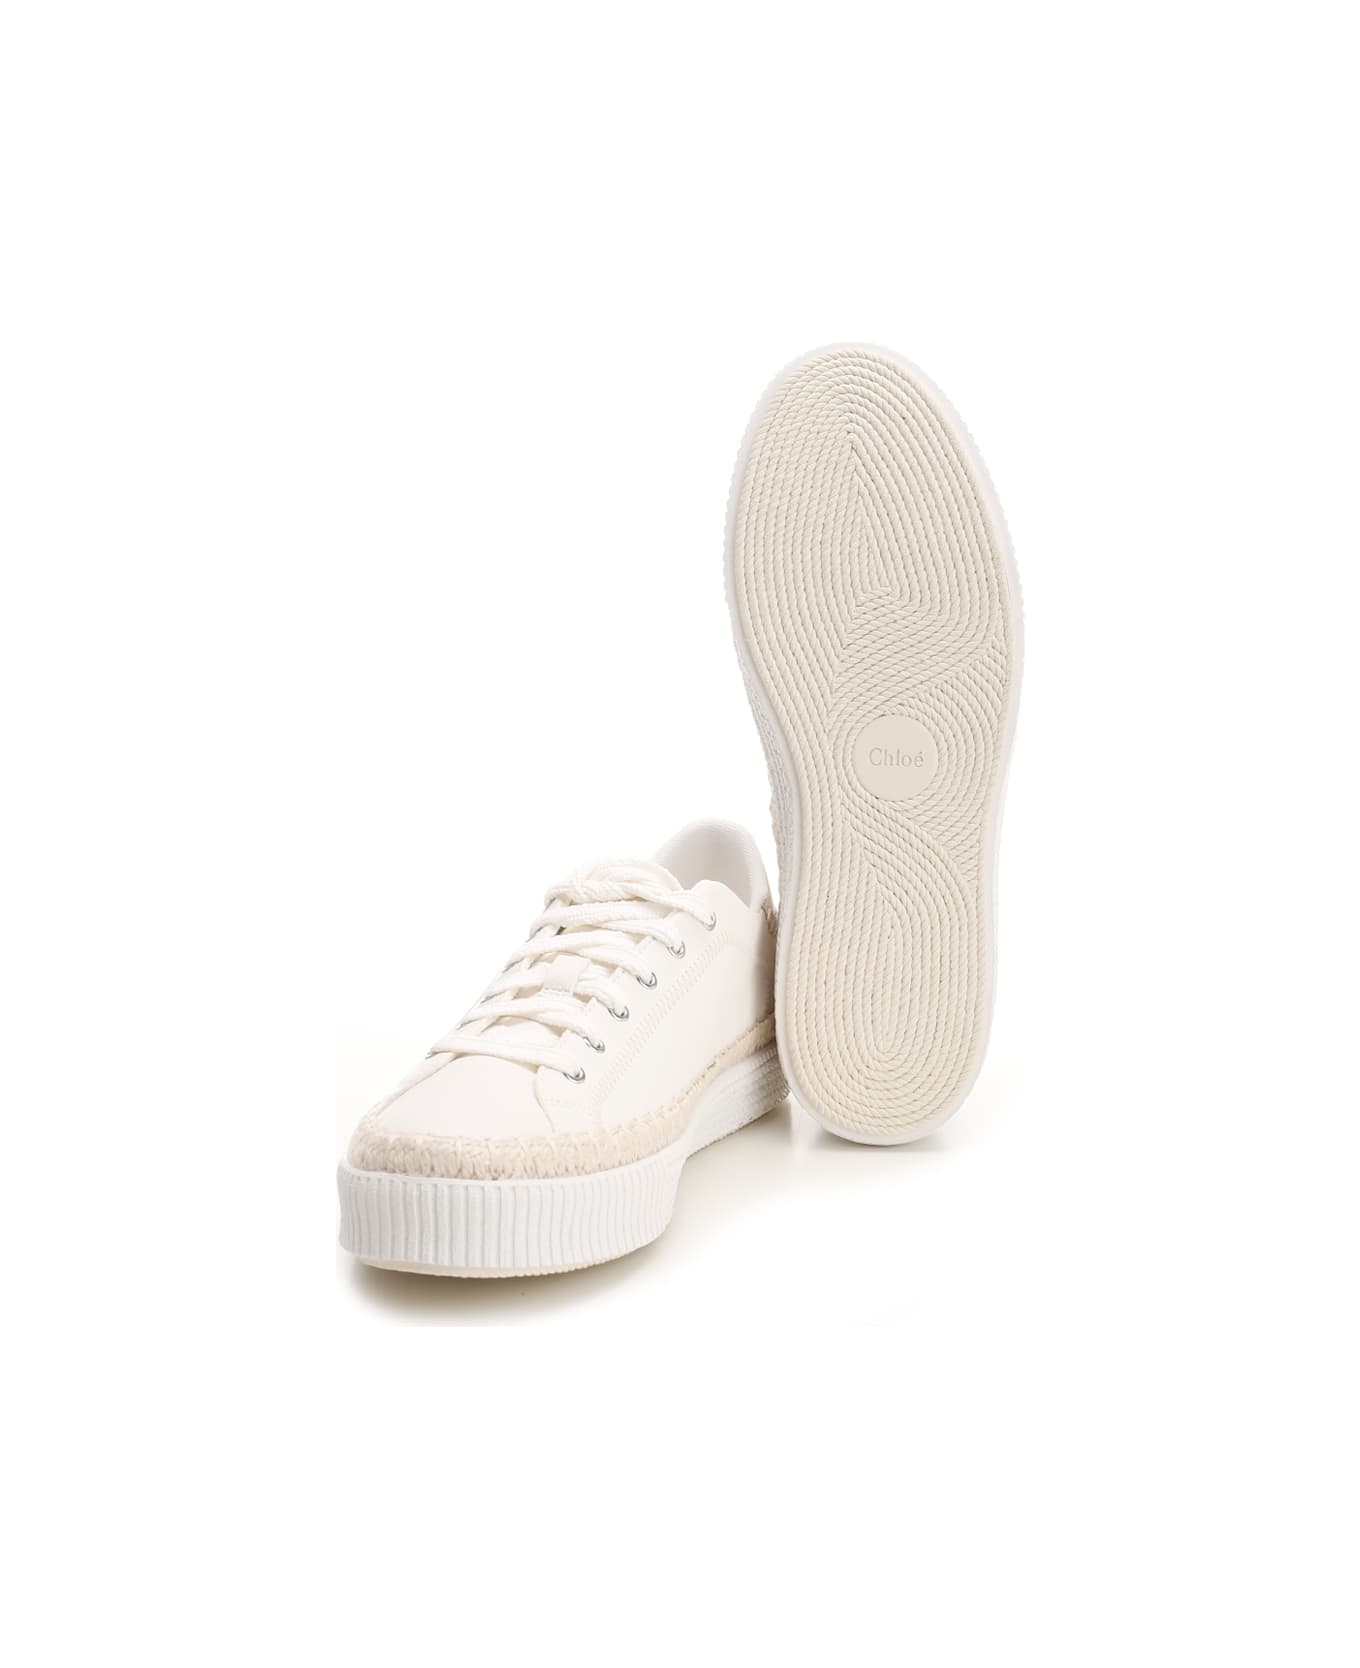 Chloé "telma" Sneakers - White